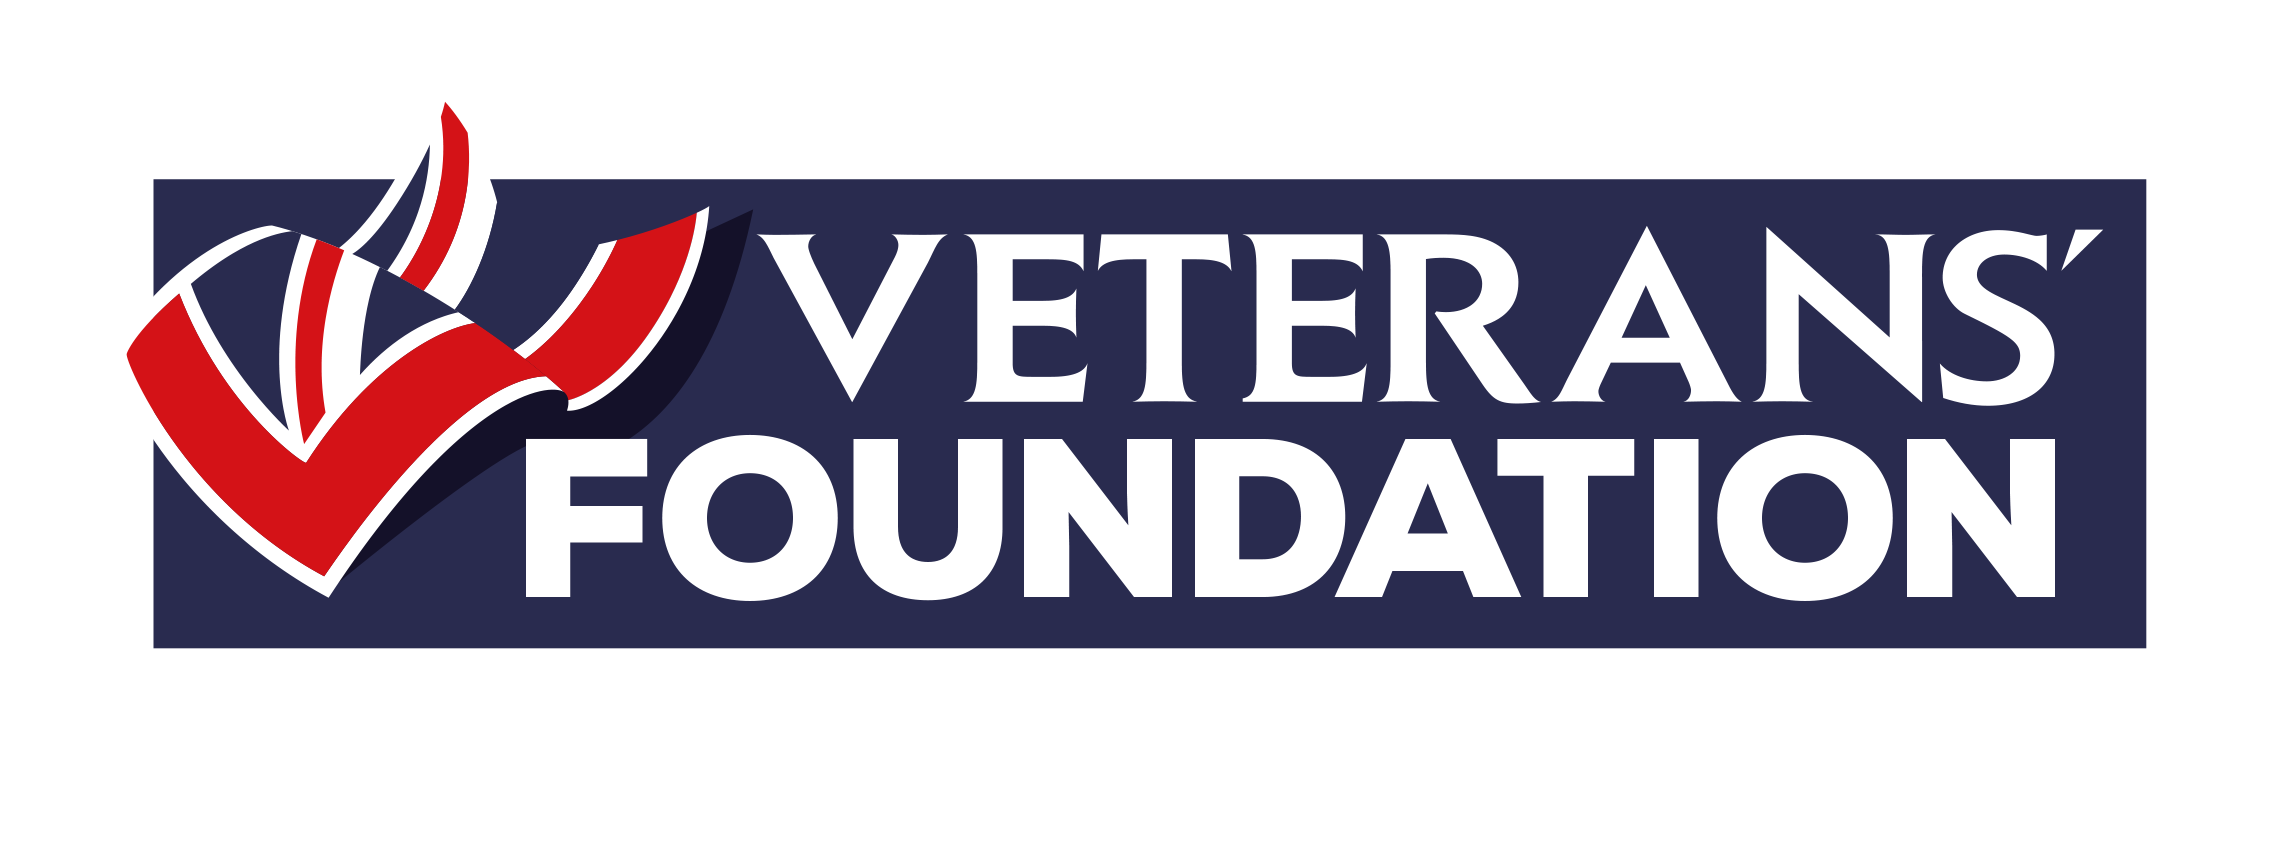 Navy Banner showing the Veterans' Foundation logo alongside the Union Jack flag